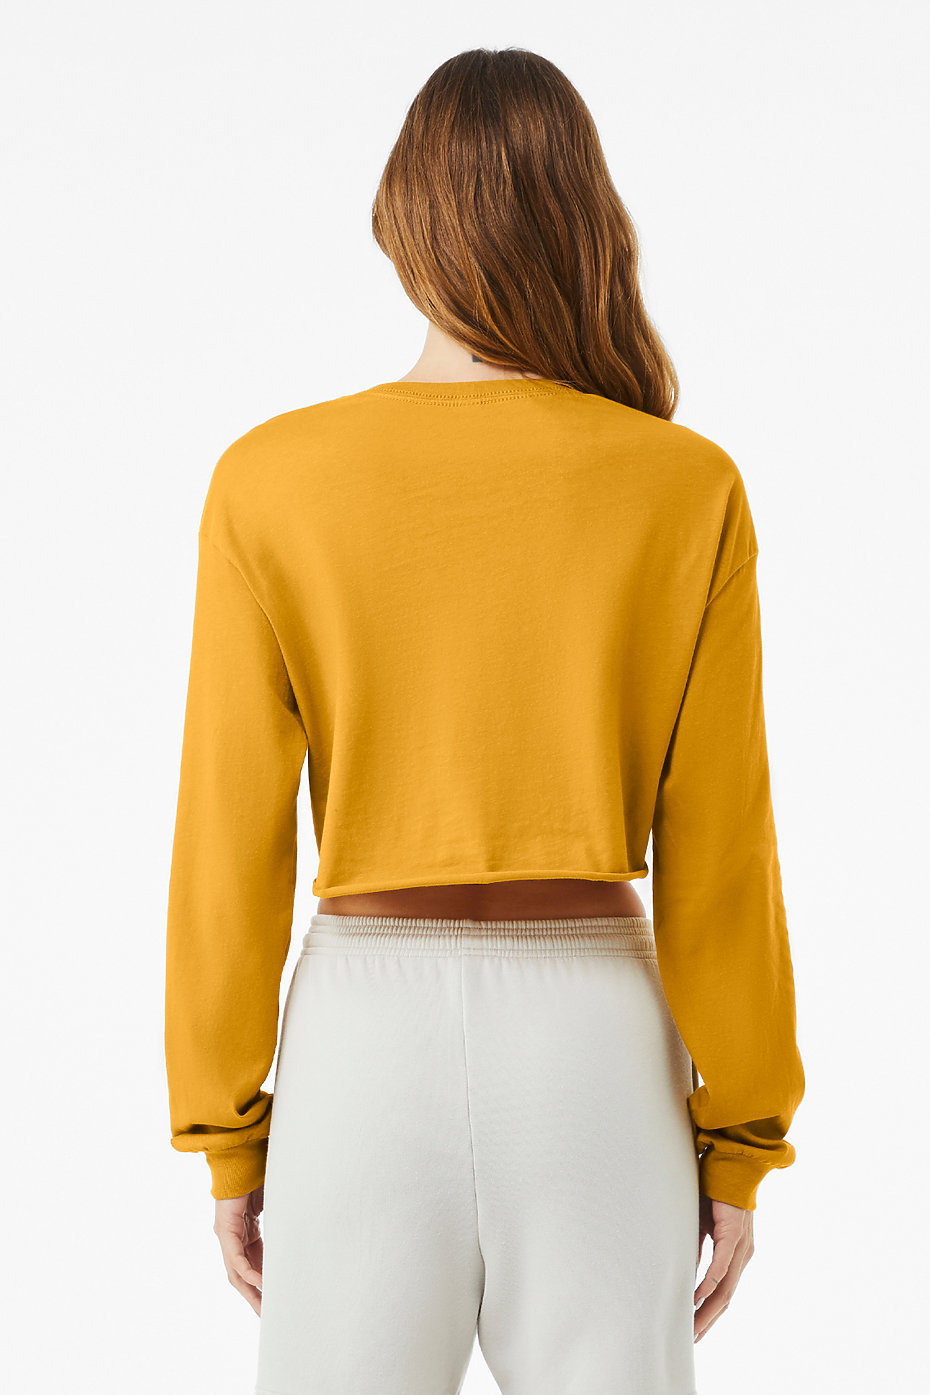 Perfect Print Overlay Pullover Streetwear Loose Long Sleeve Crop Top Sweater